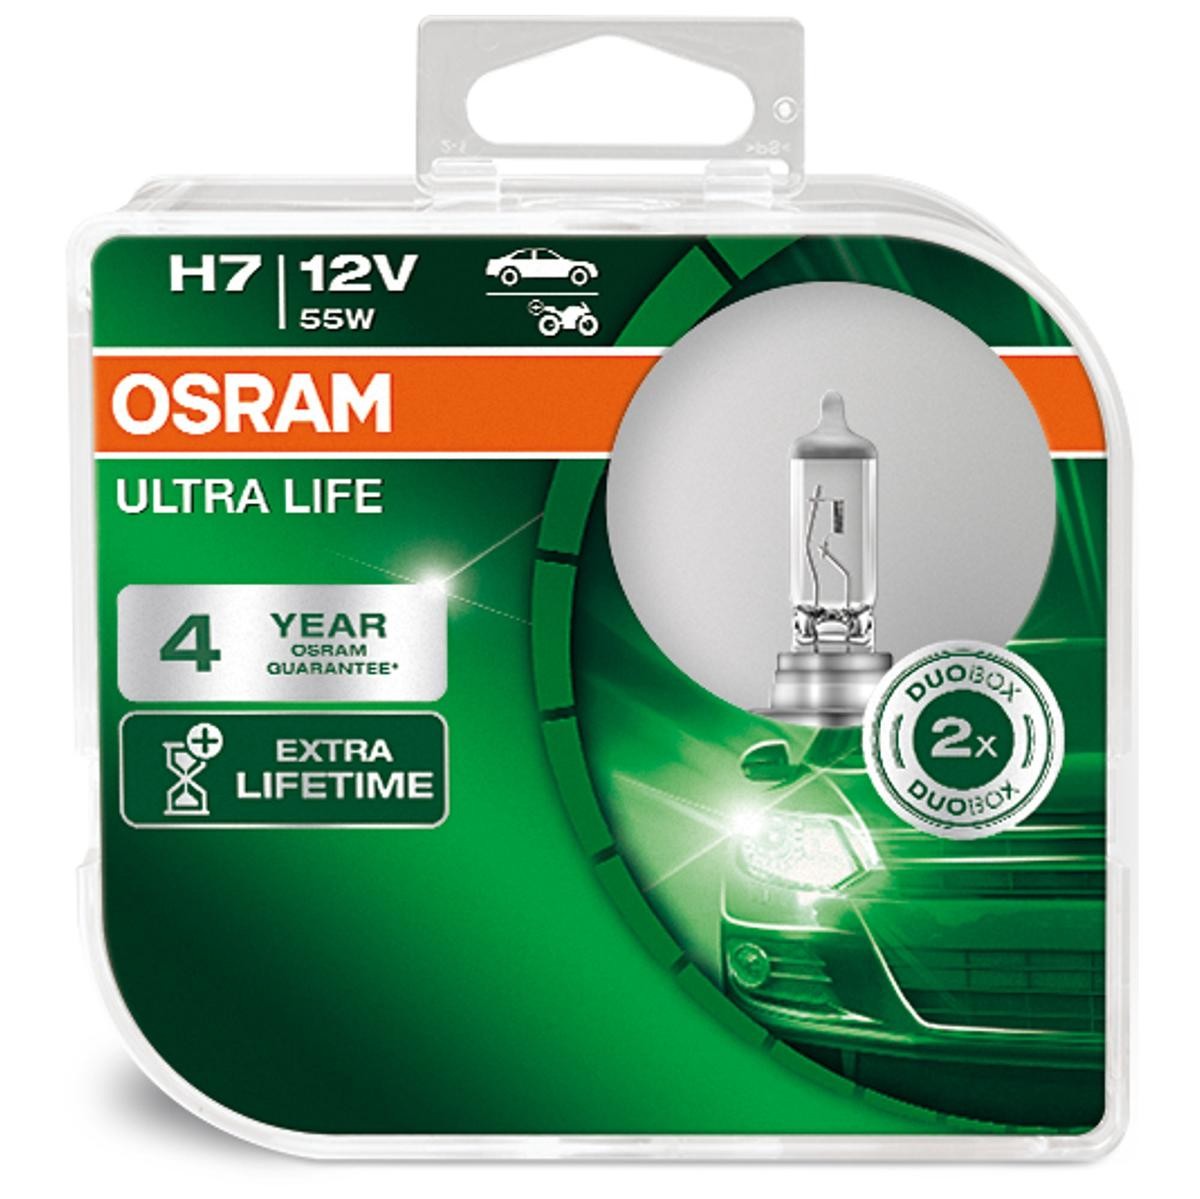 H7 OSRAM ULTRA LIFE H7 12V 55W PX26d 3800K Halogen Glühlampe, Fernscheinwerfer 64210ULT-HCB günstig kaufen